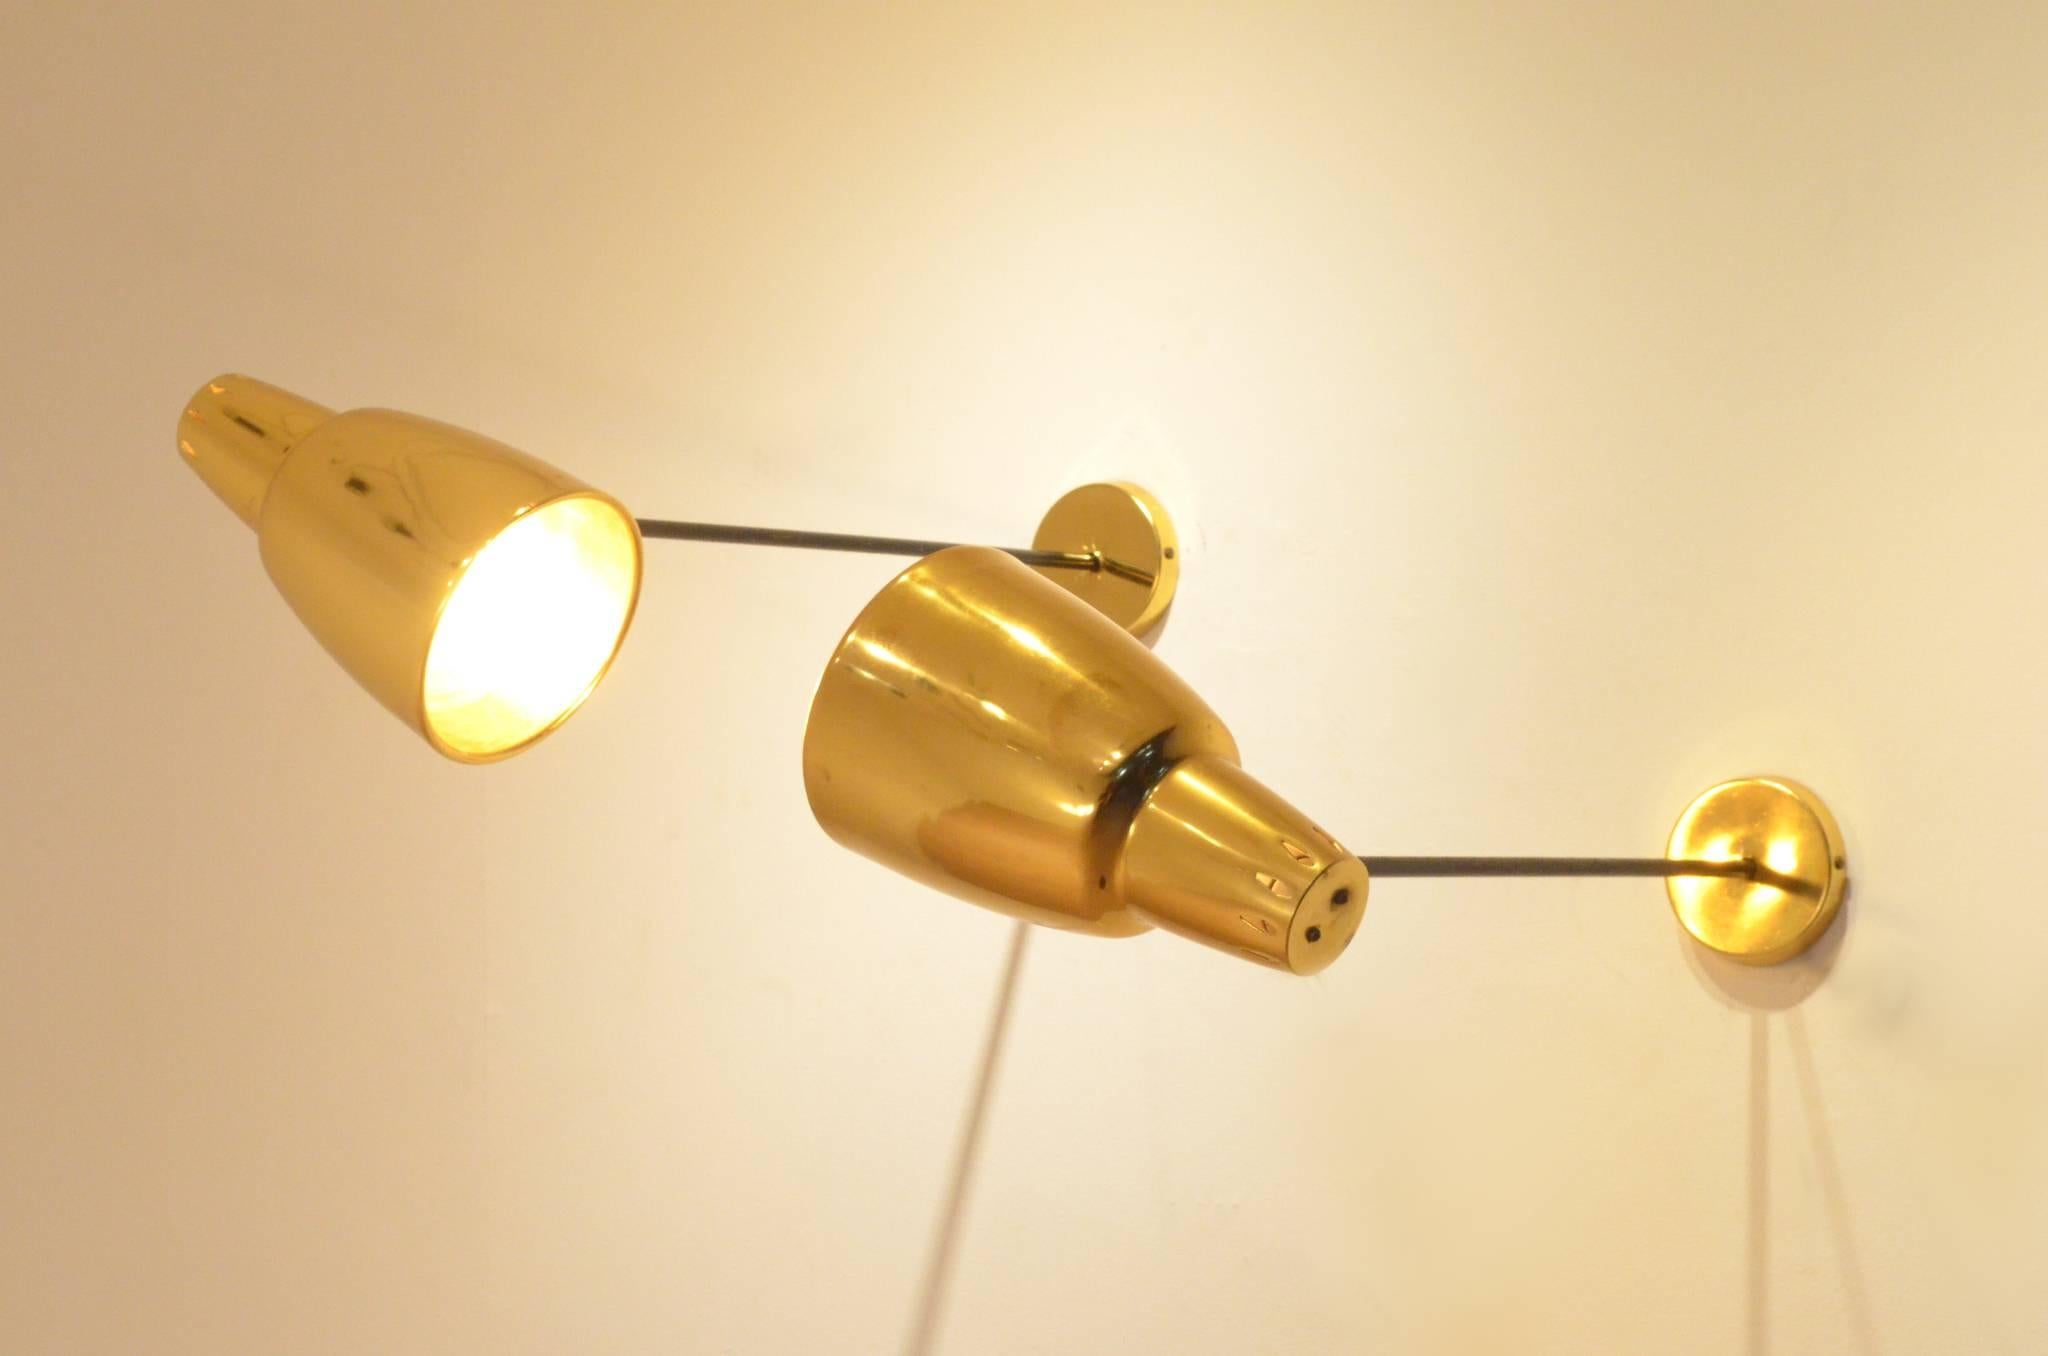 Two French Design Luminalite Golden Aluminium Metal Arm Lamps Sconces For Sale 1